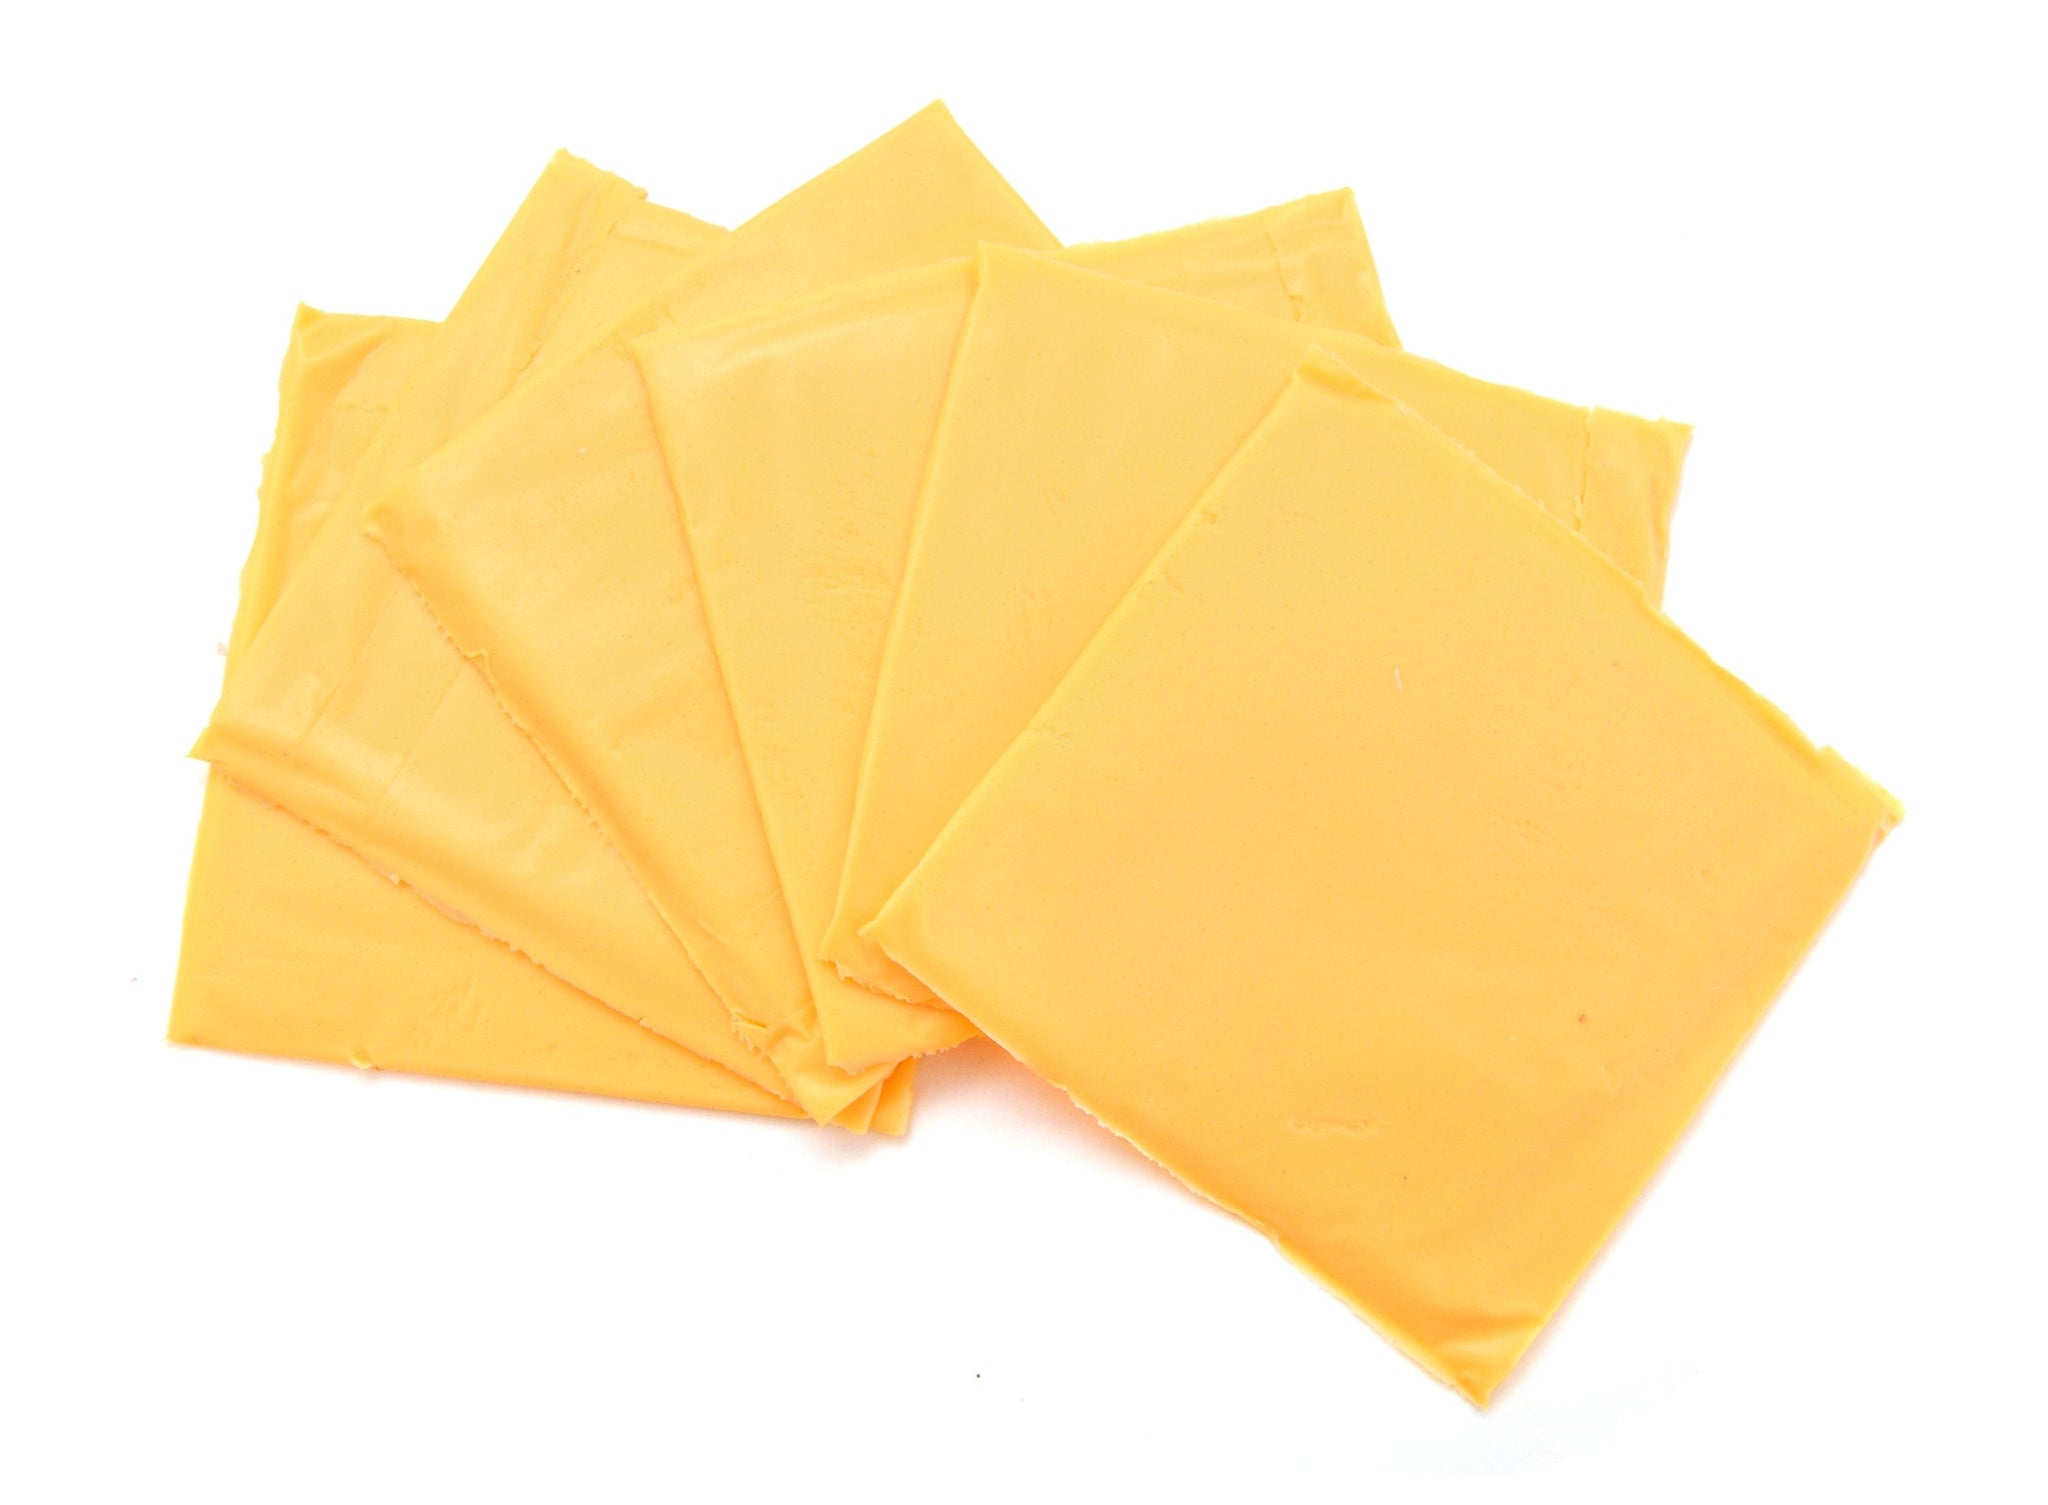 bvi>Kraft American Slice Cheese - 8 oz